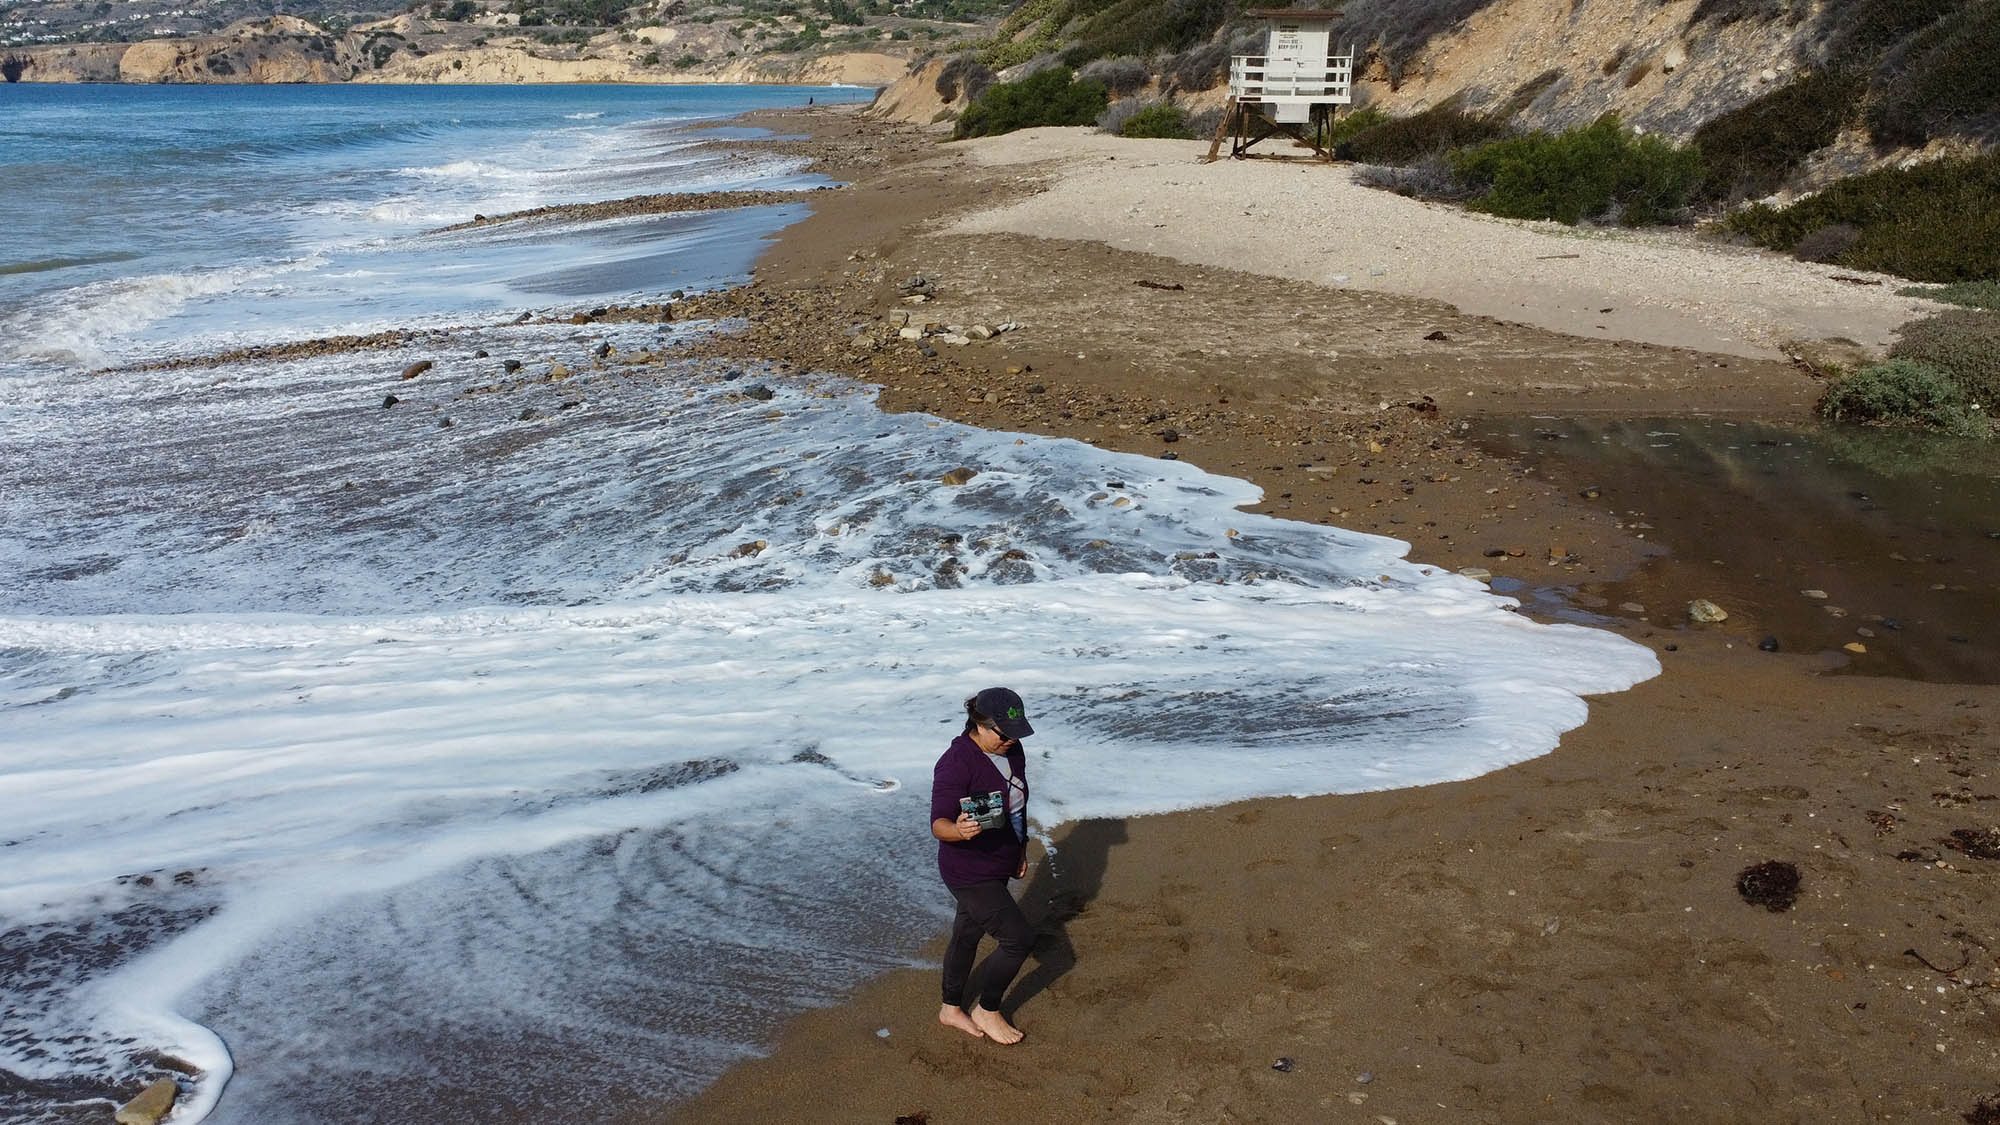 Myrna Aguilar walks on beach while holding Drone controller